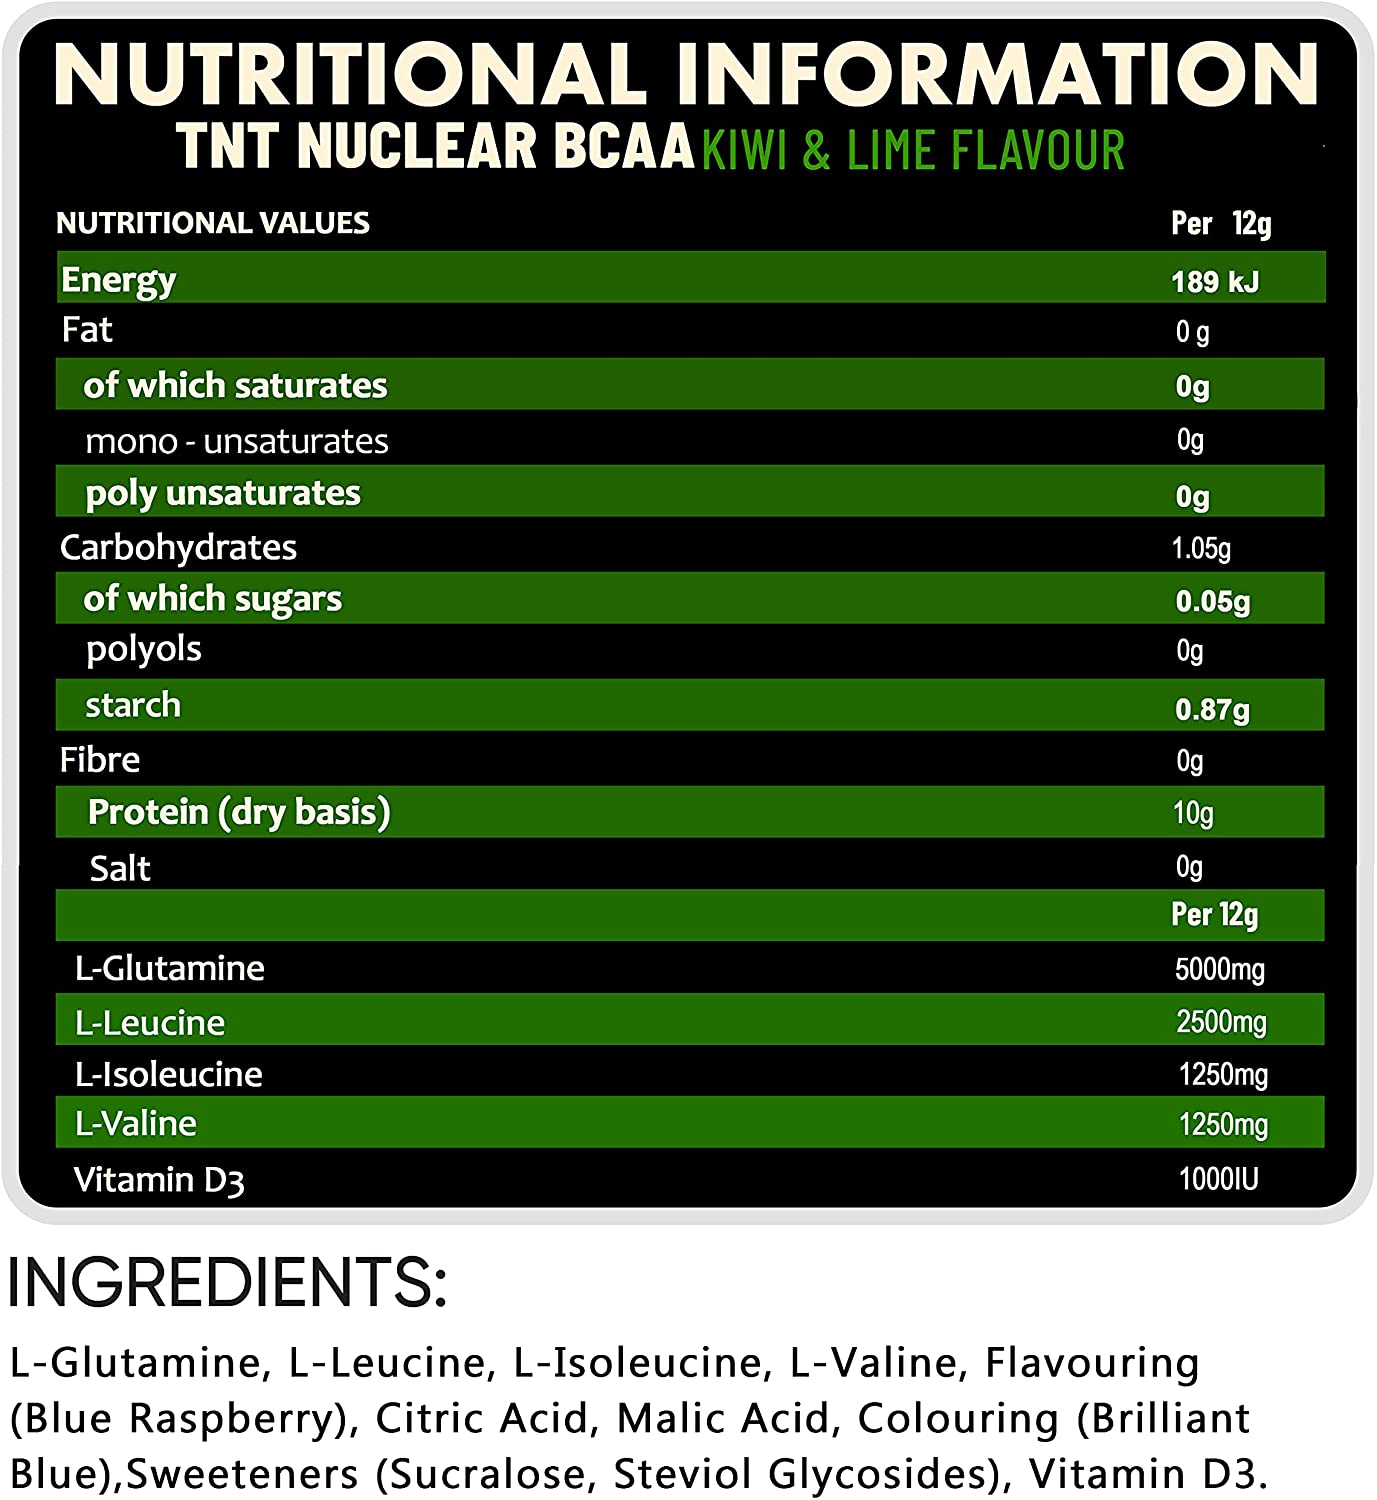 NXT Nutrition BCAA Glutamine Vitamin D